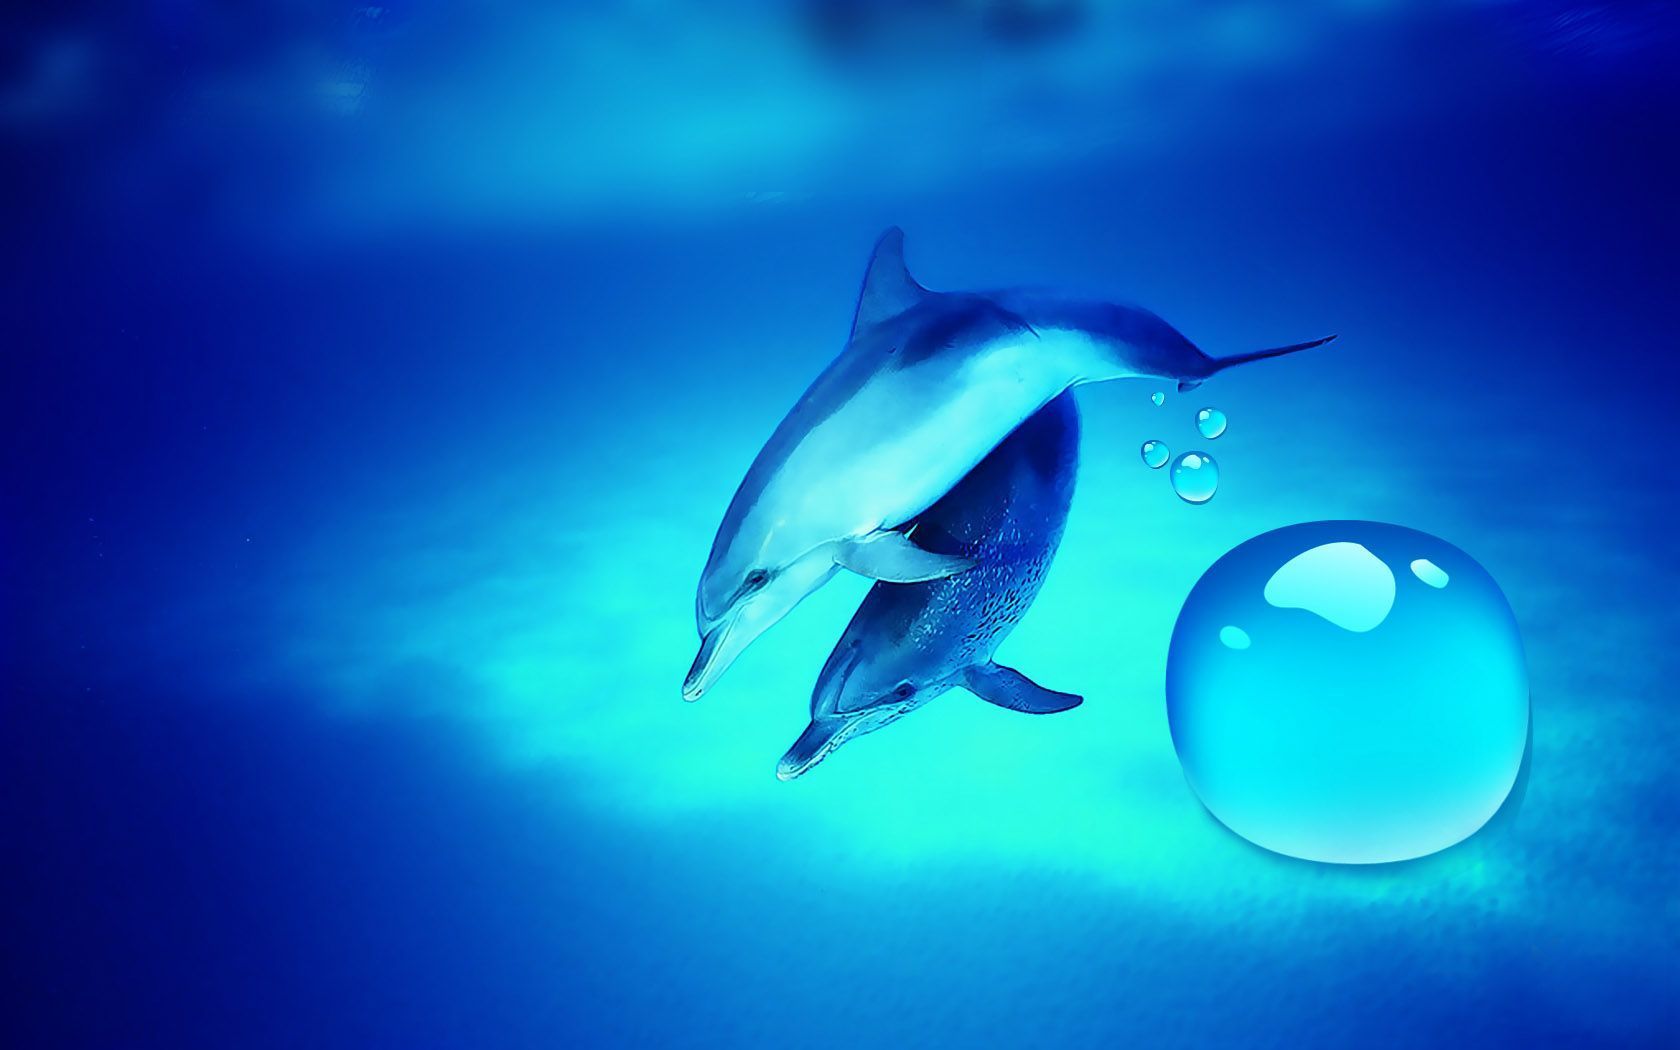 Romantic Dolphin Wallpaper Desktop,Dolphins hd wallpapers,Animal ...